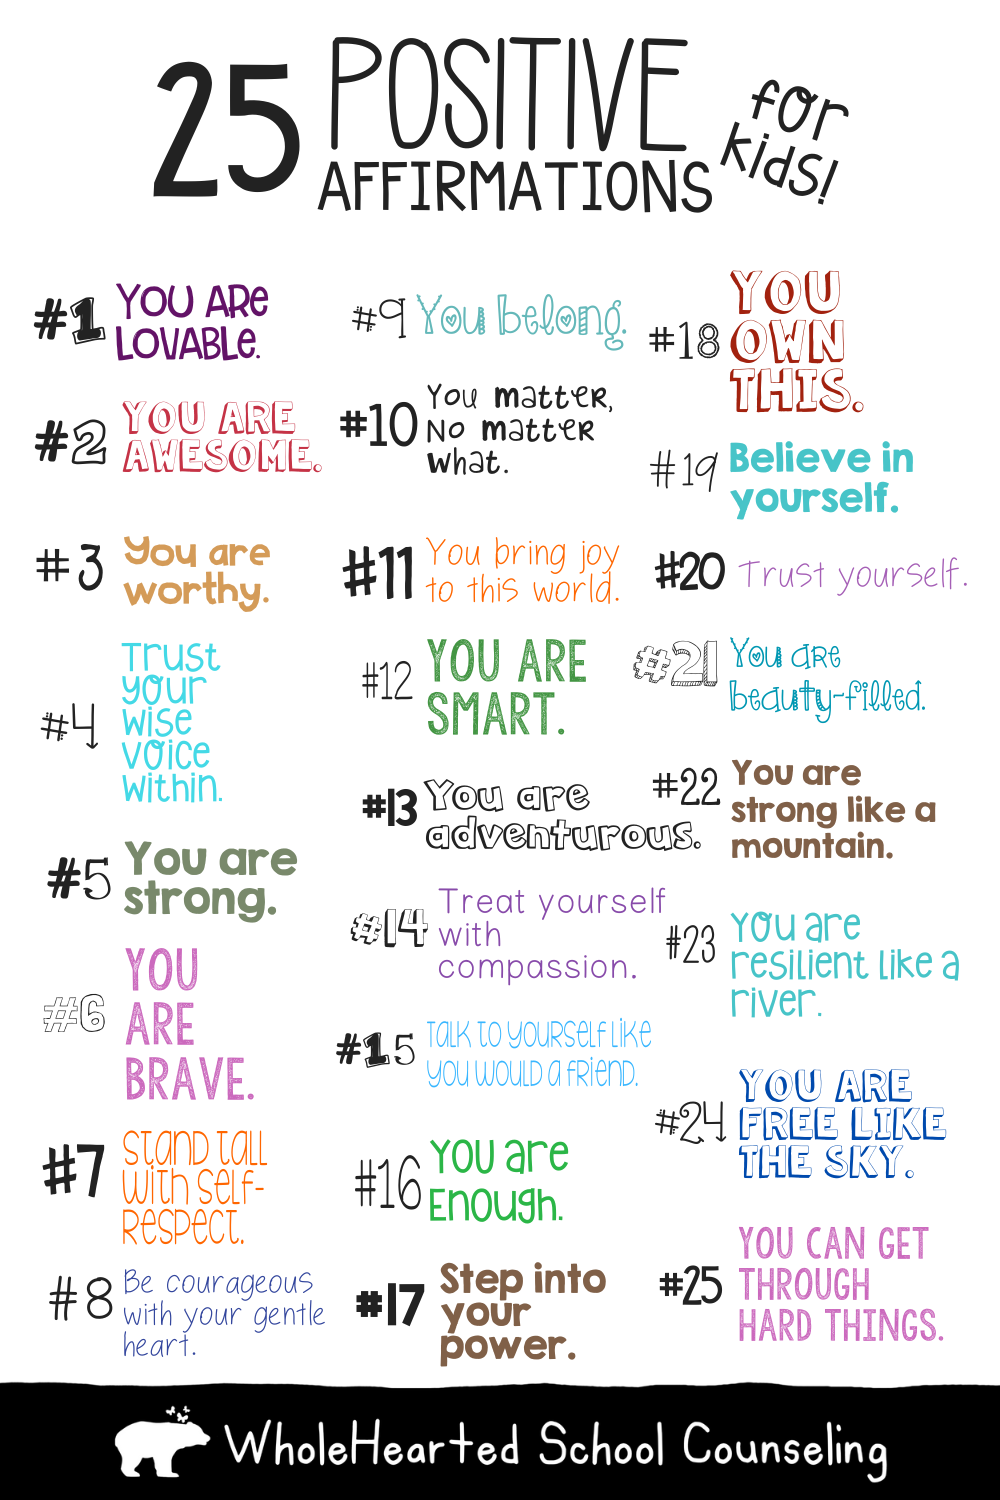 List of 25 positive affirmations for kids.